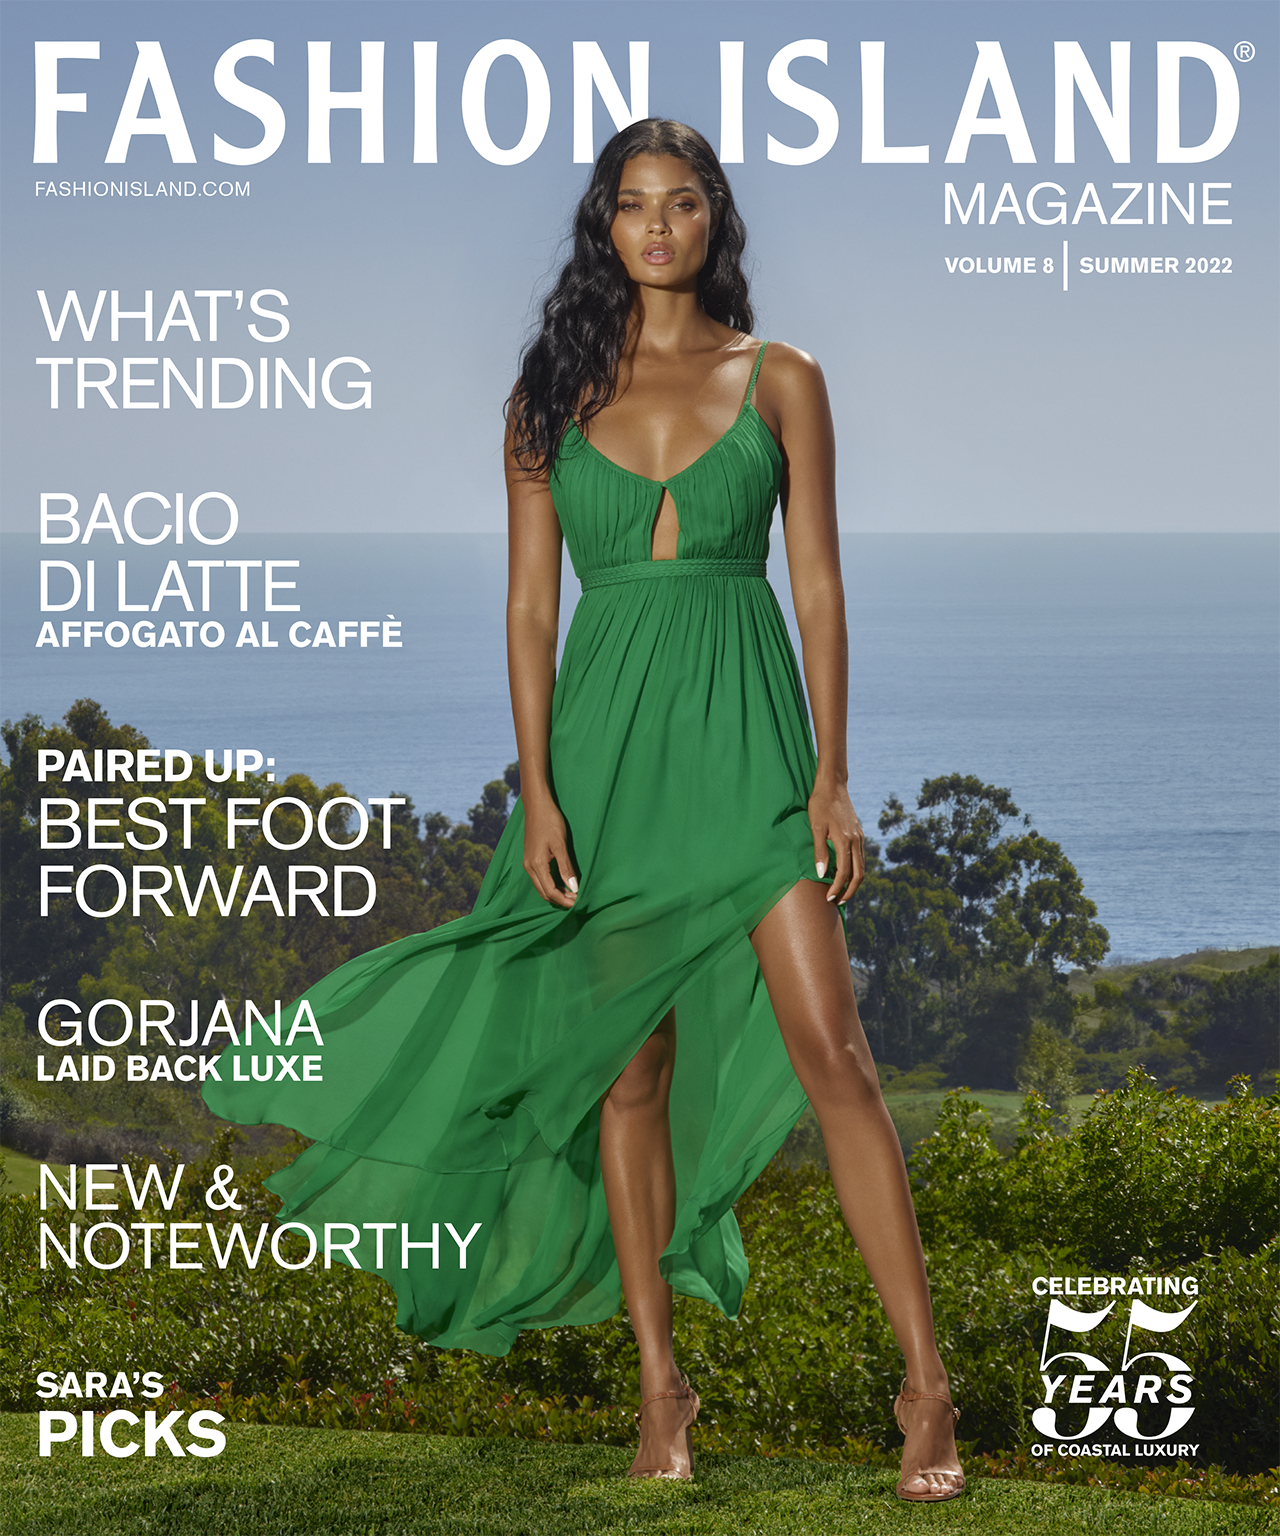 Fashion Island Magazine Volume 8